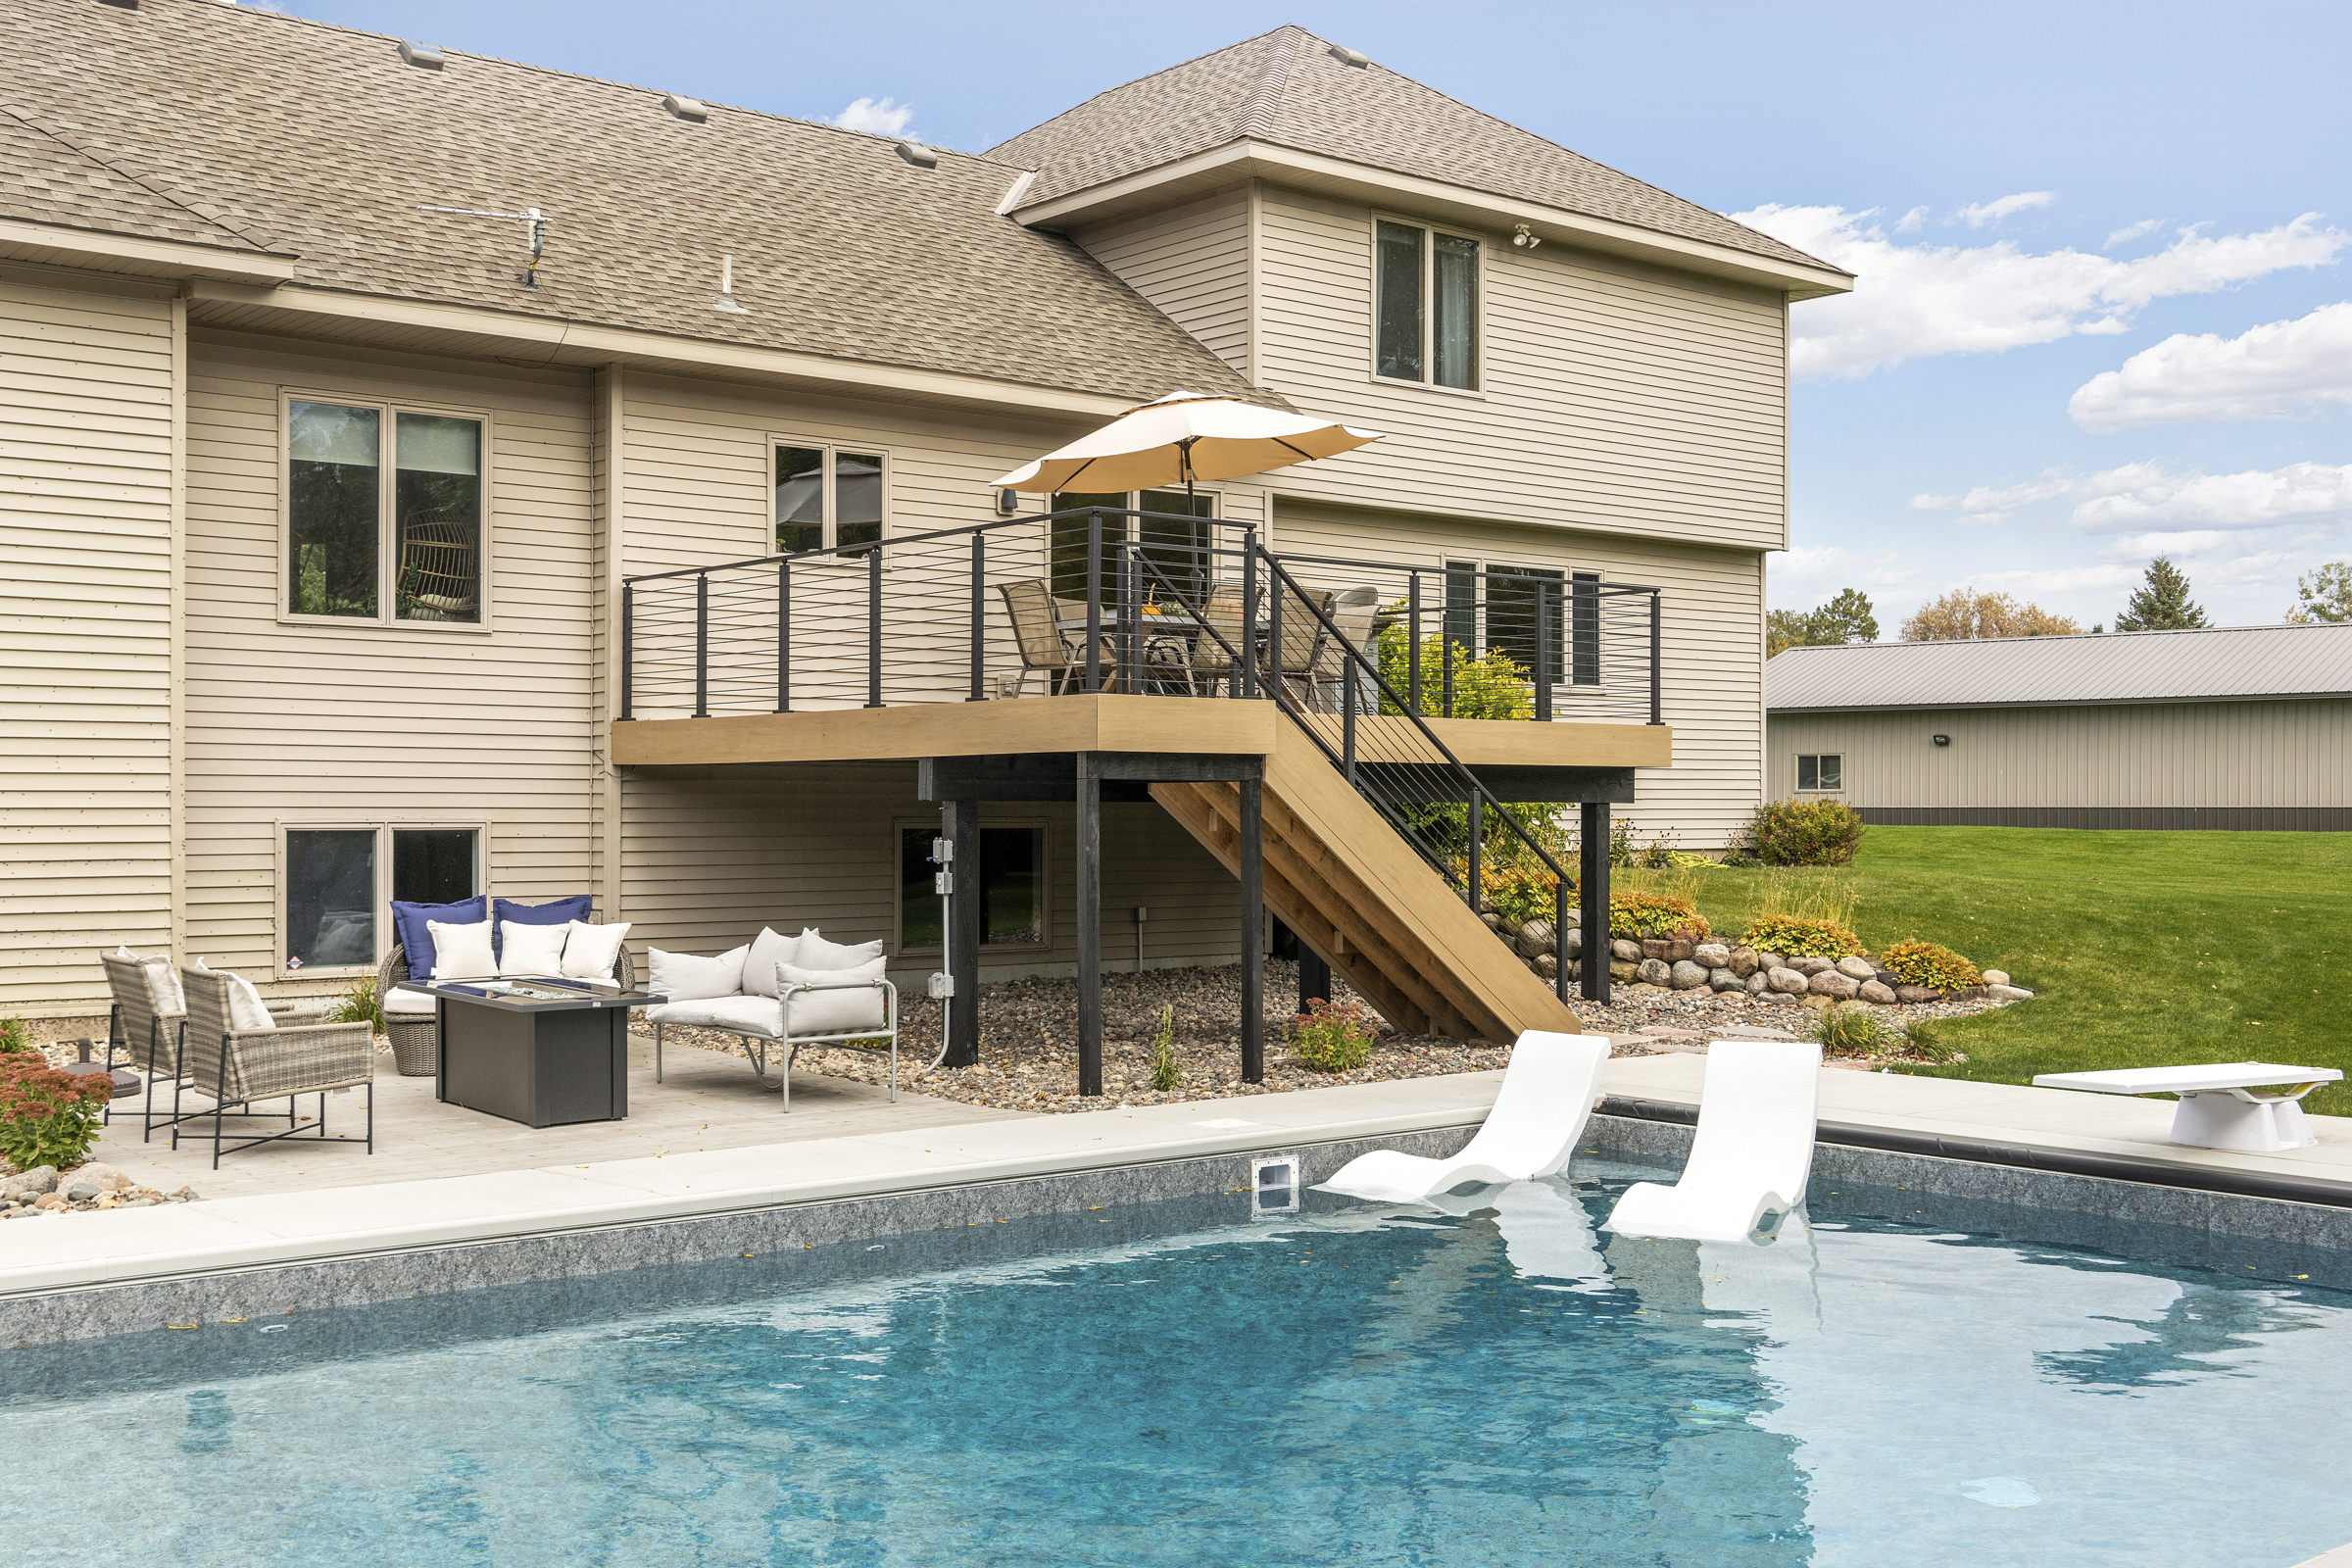 composite decking material, black rod iron railing, viewrail, backyard pool design inspiration